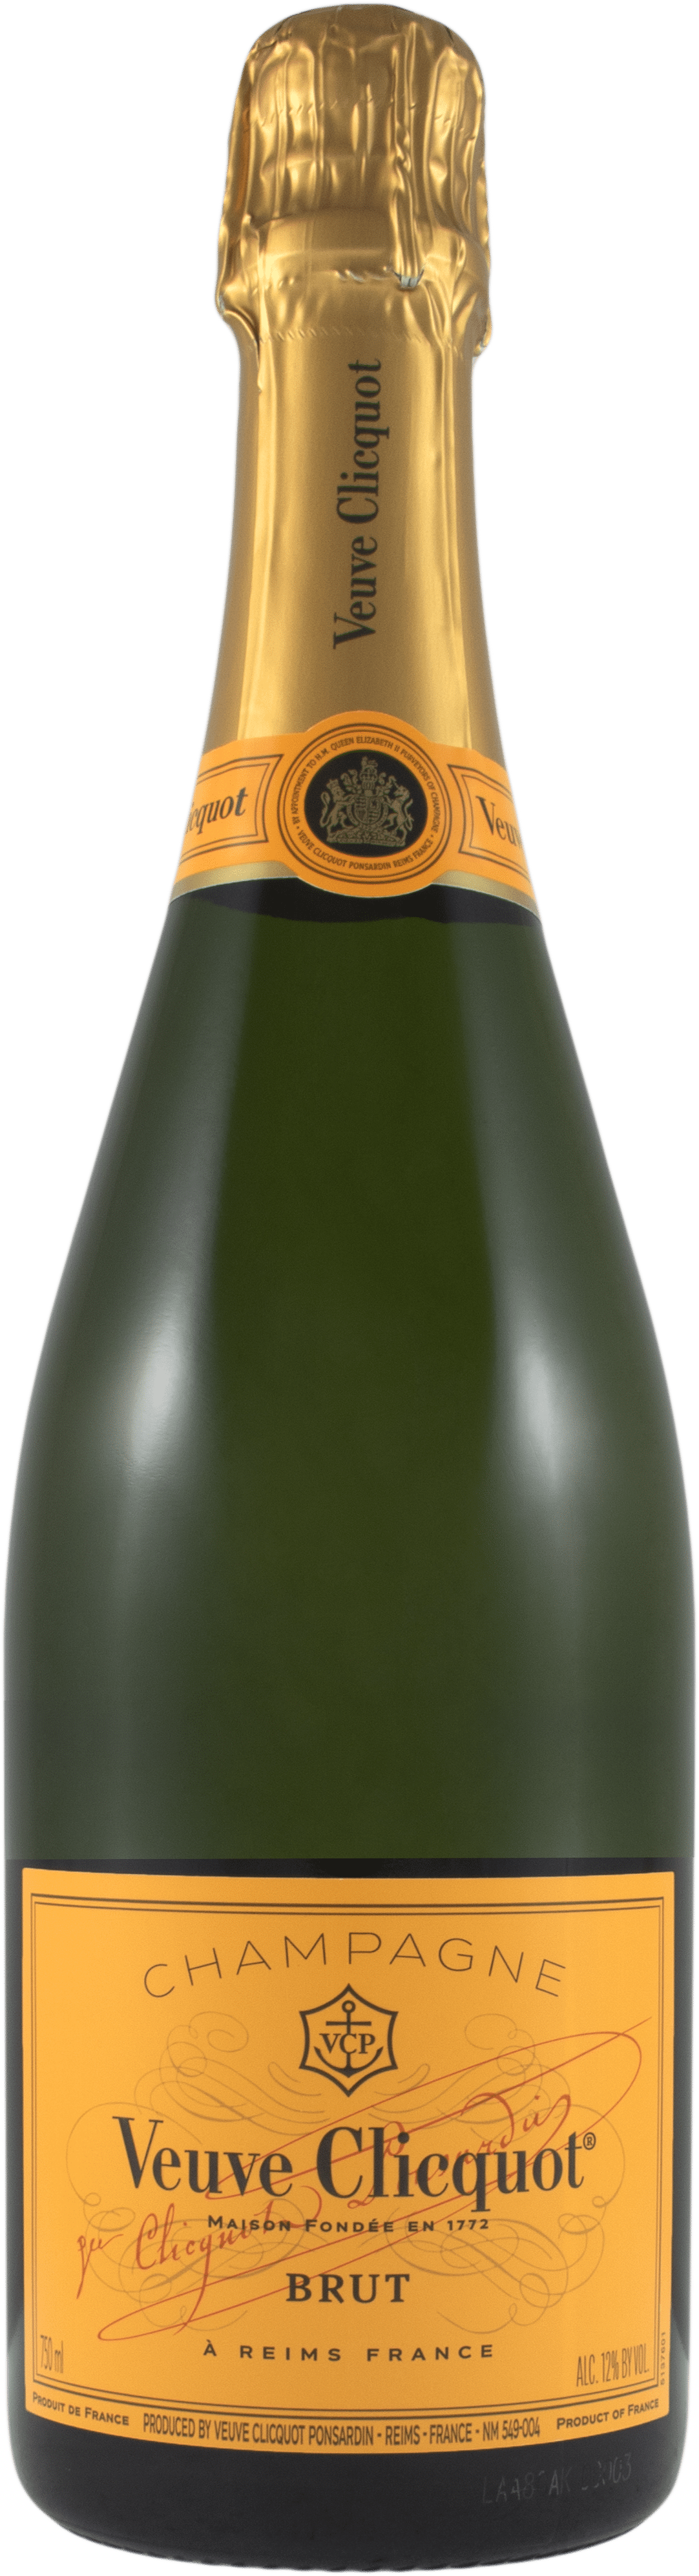 Veuve Clicquot Brut Wine Bounty